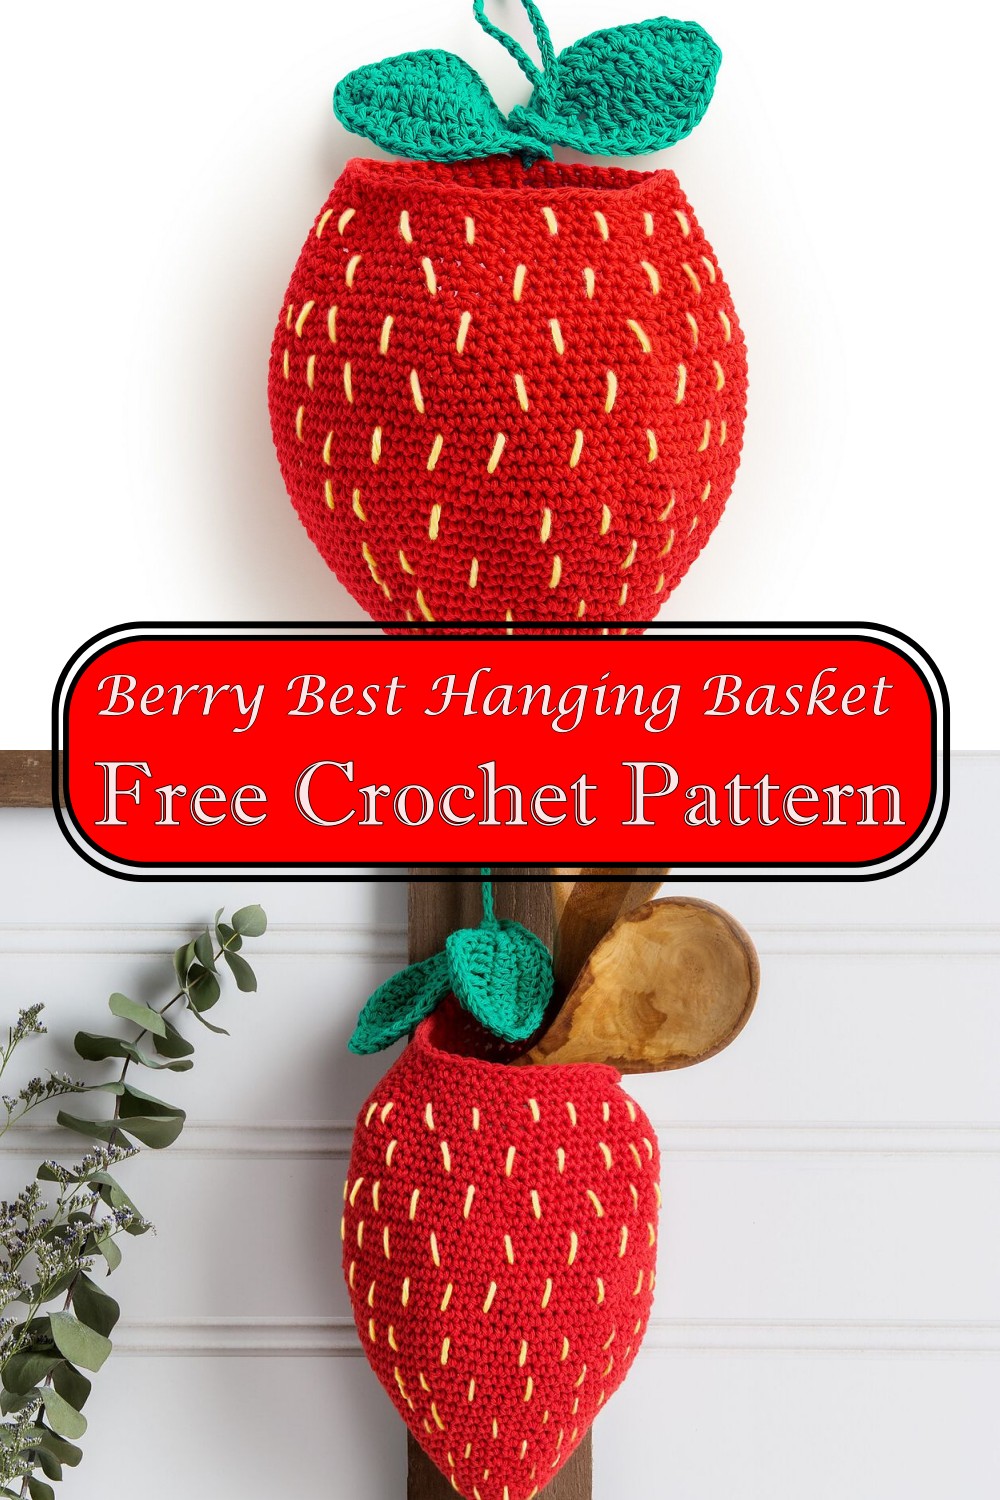 Berry Best Hanging Basket